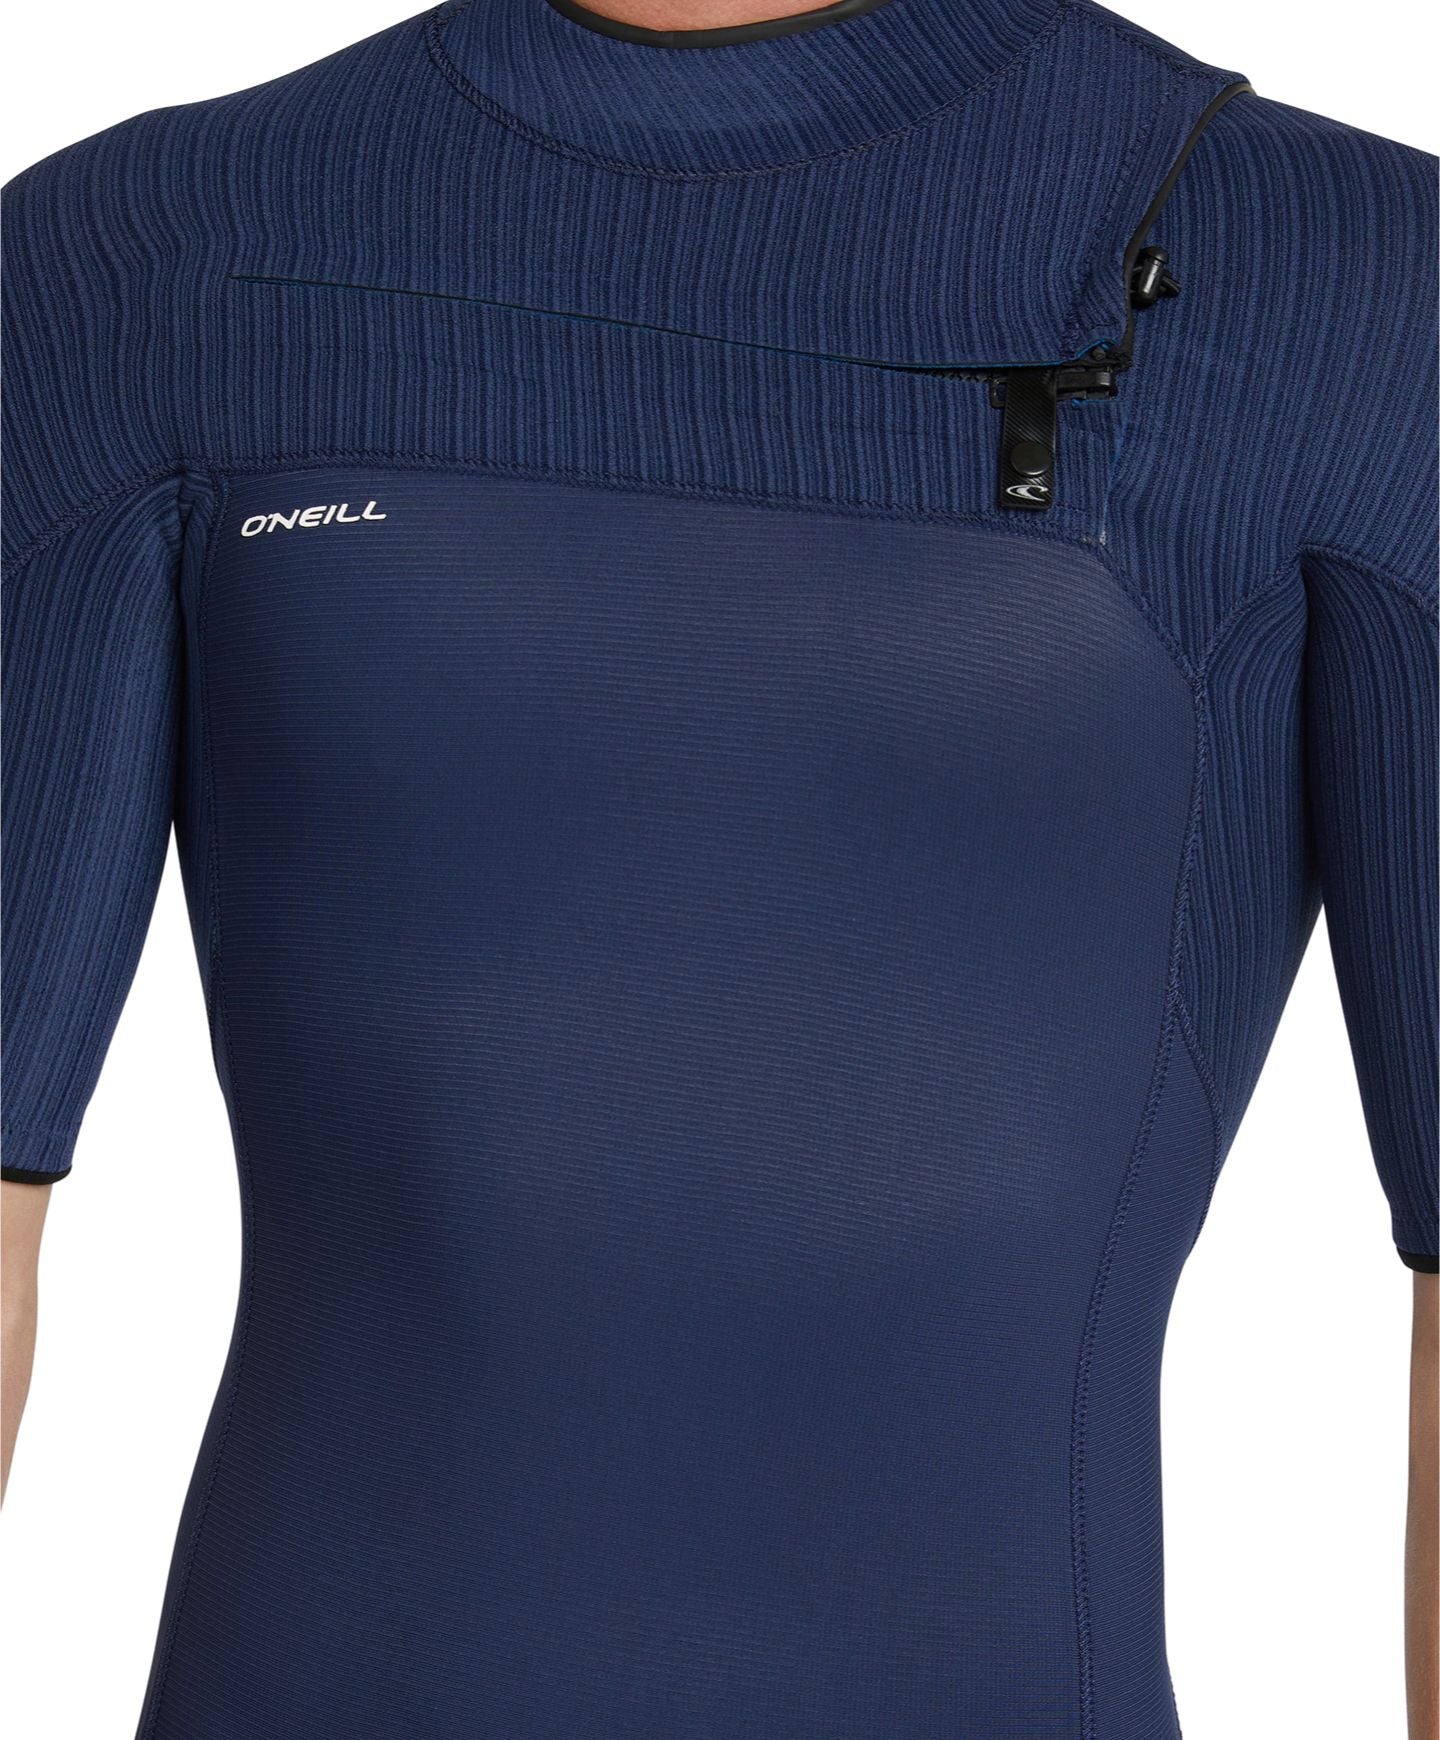 Hyperfreak Short Sleeve Springsuit 2mm Chest Zip Wetsuit - Navy